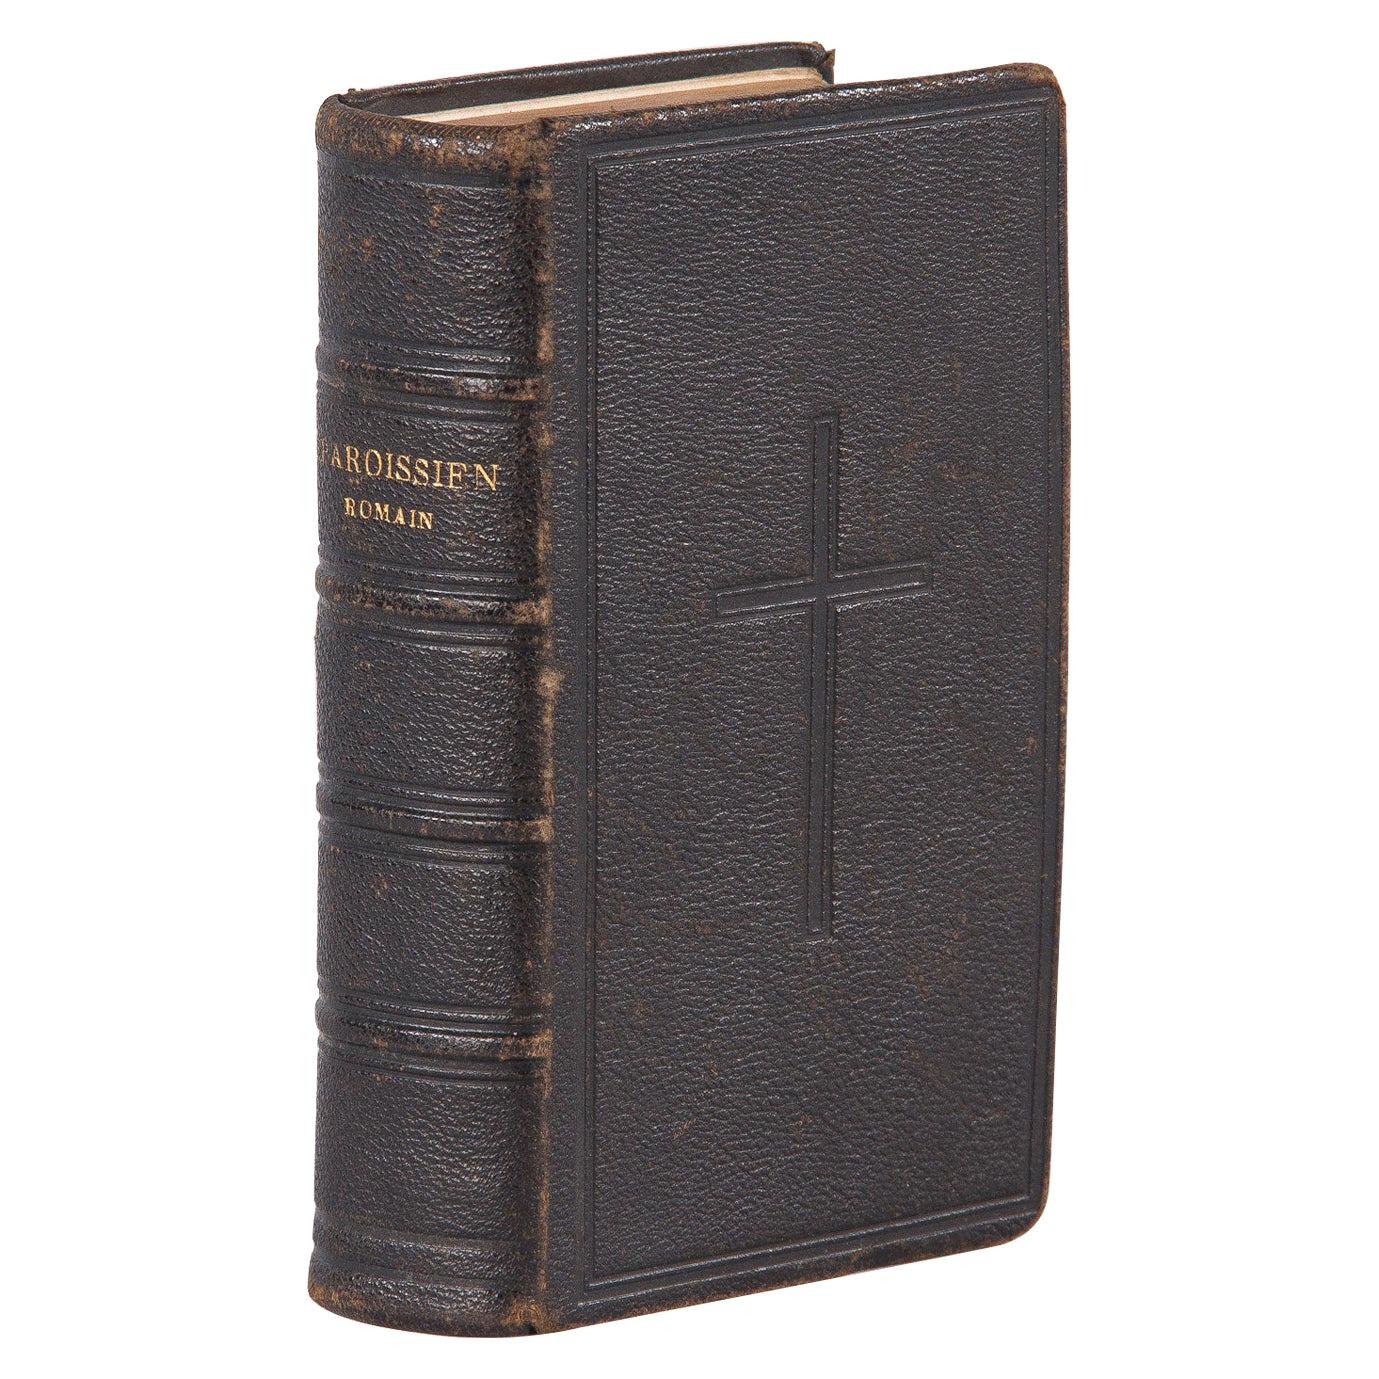 French Missal Book-Paroissien Roman, 1880